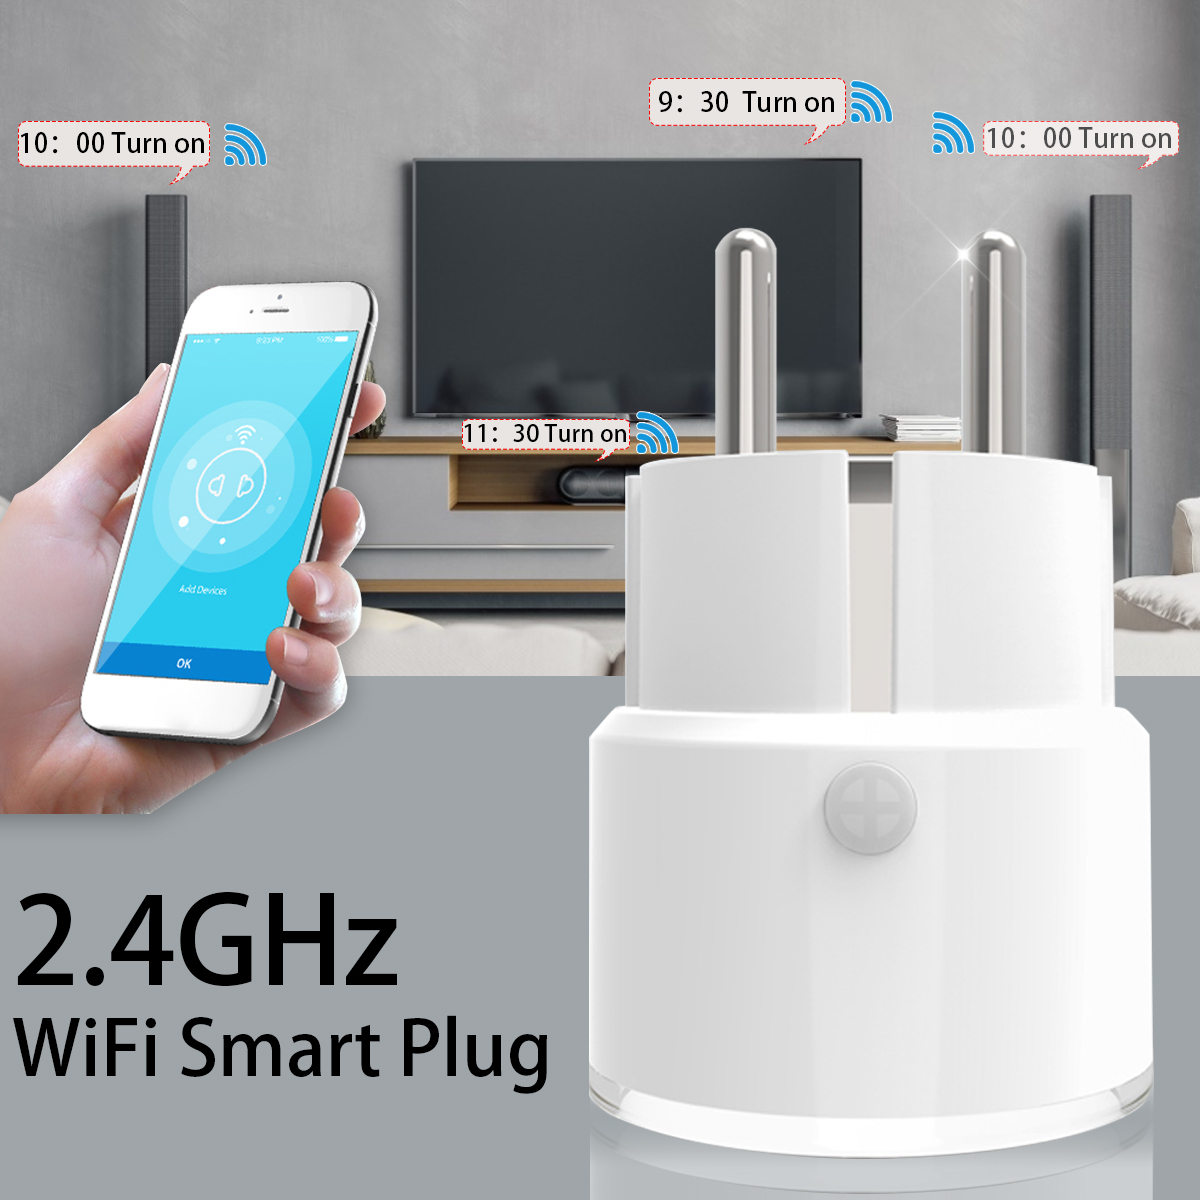 24GHz-Wifi-Smart-EU-Plug-Remote-Control-Outlet-Wireless-Home-Power-Socket-Switch-Timer-1529605-1